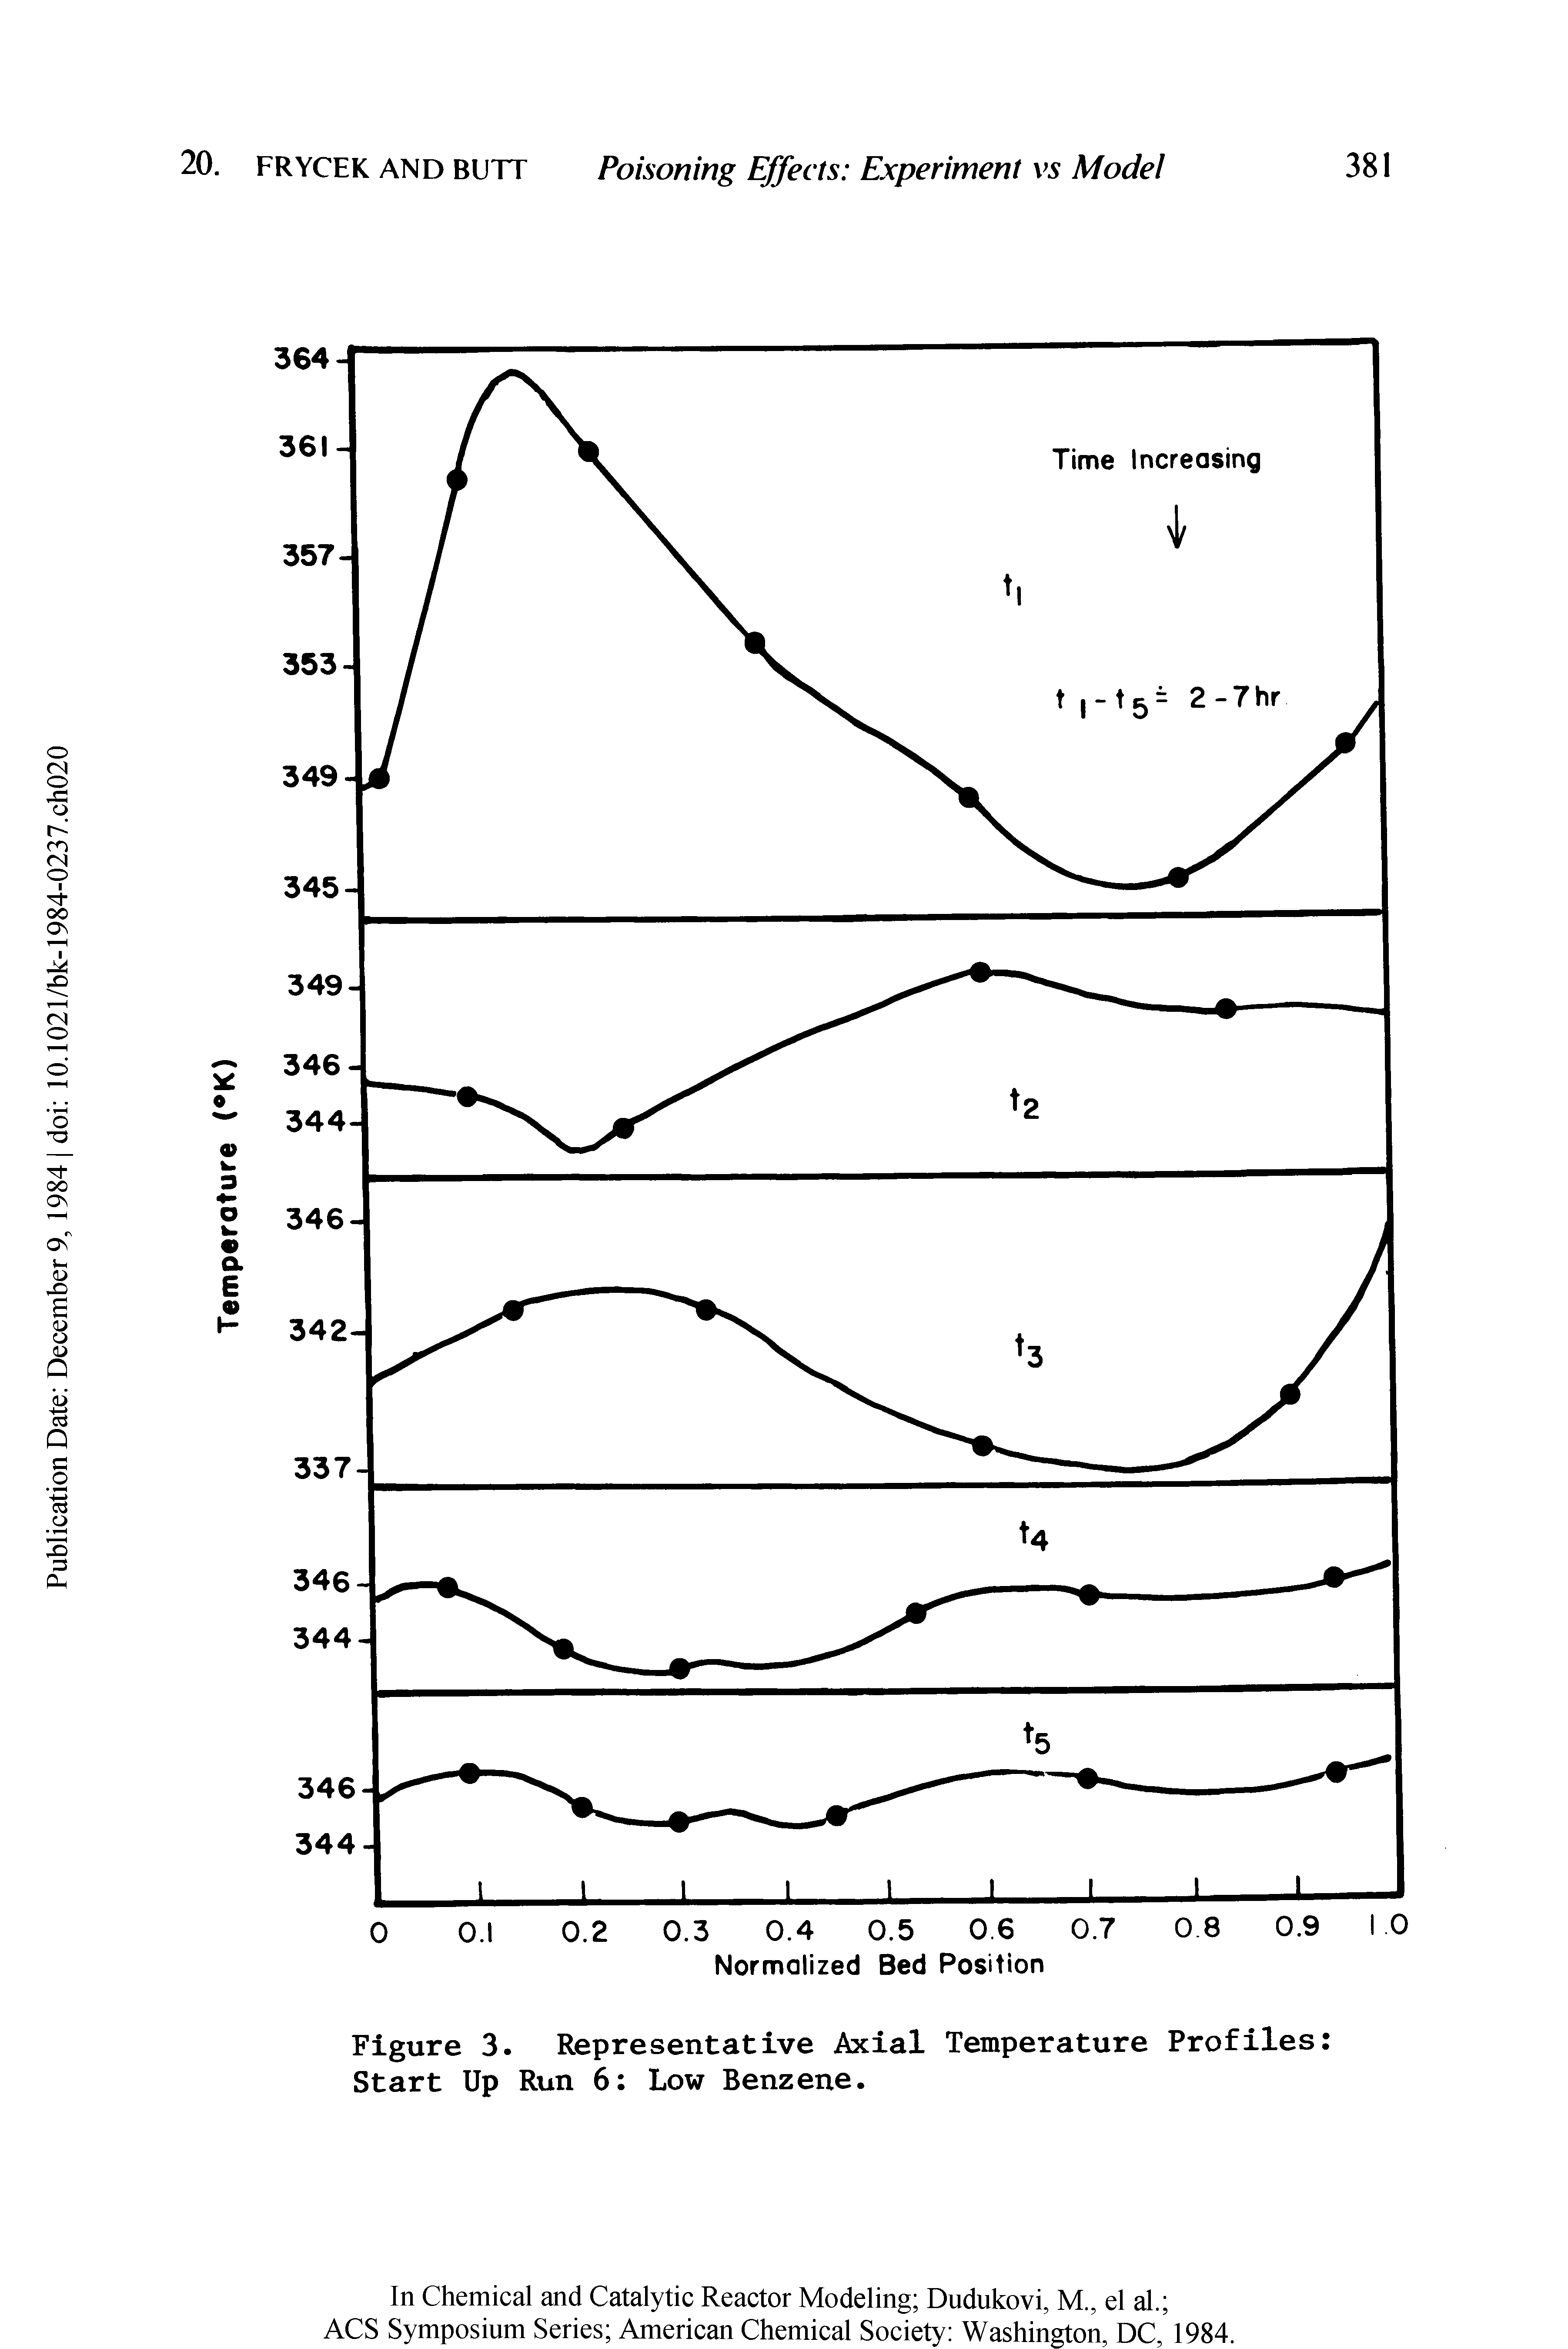 Figure 3. Representative Axial Temperature Profiles Start Up Run 6 Low Benzene.